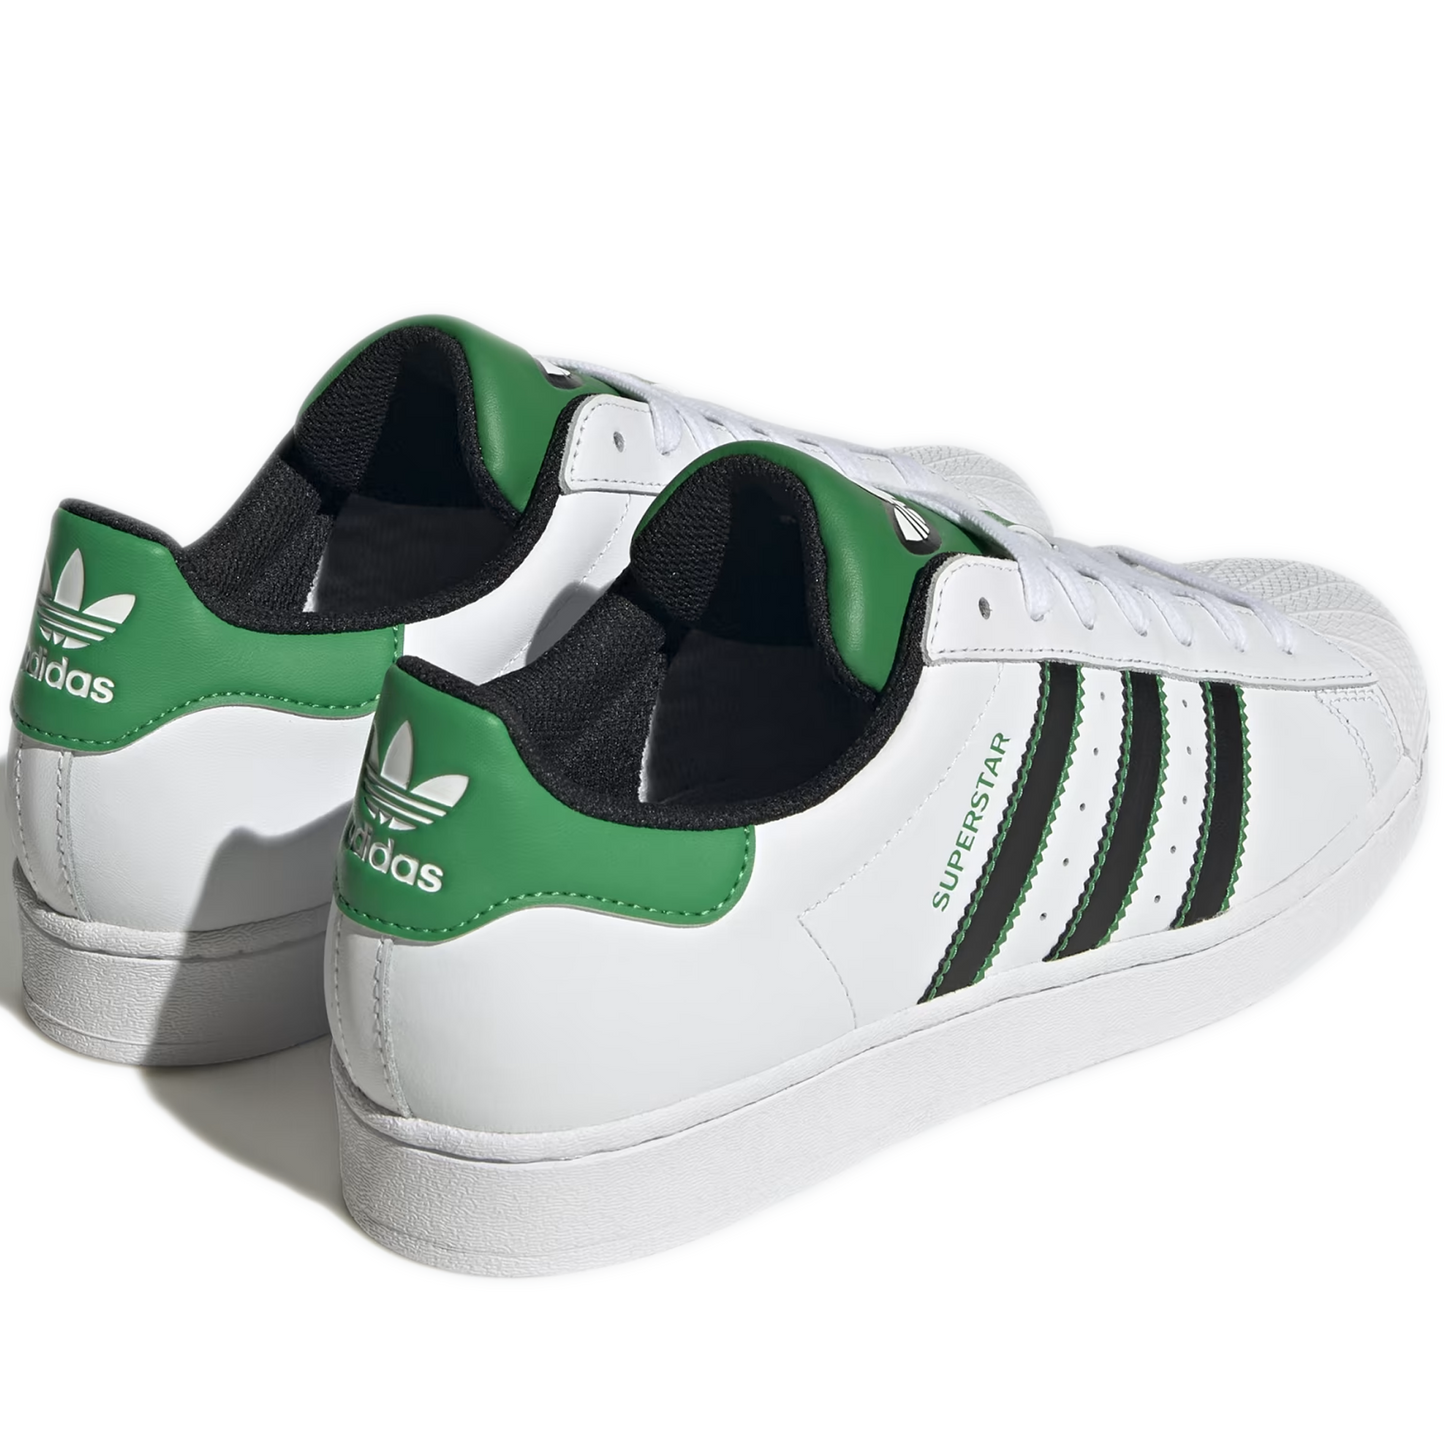 Men's Adidas Superstar Shoes - White/ Black/ Green